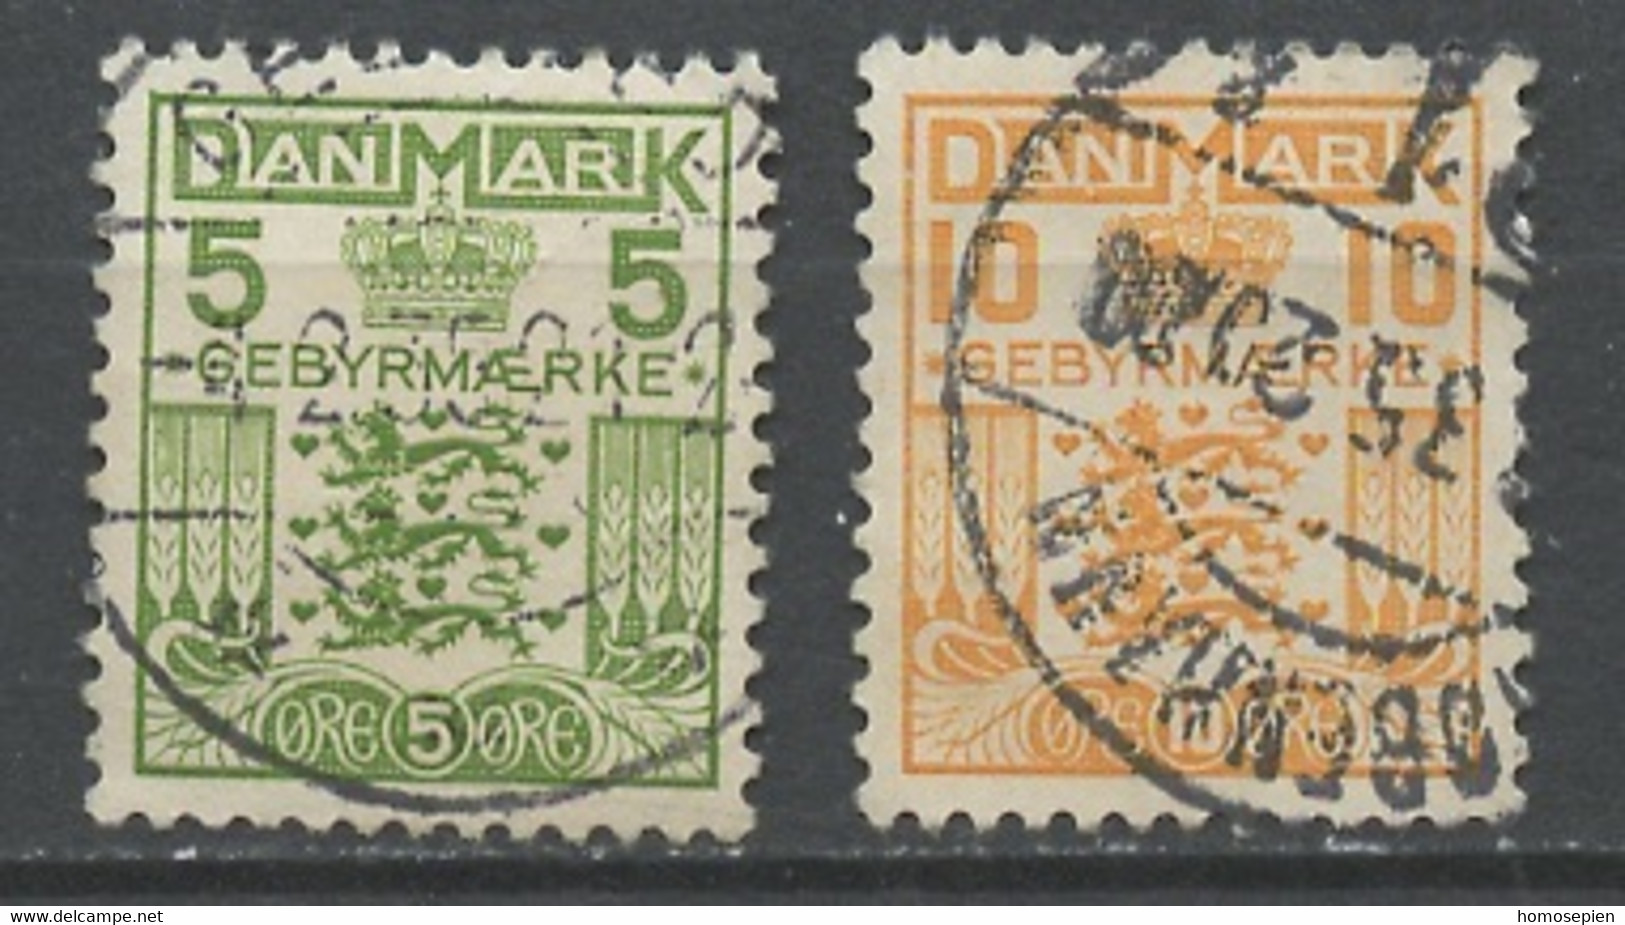 Danemark - Dänemark - Denmark Taxe 1934-53 Y&T N°T34 à 35 - Michel N°P17 à 18 (o) - Armoirie - Postage Due